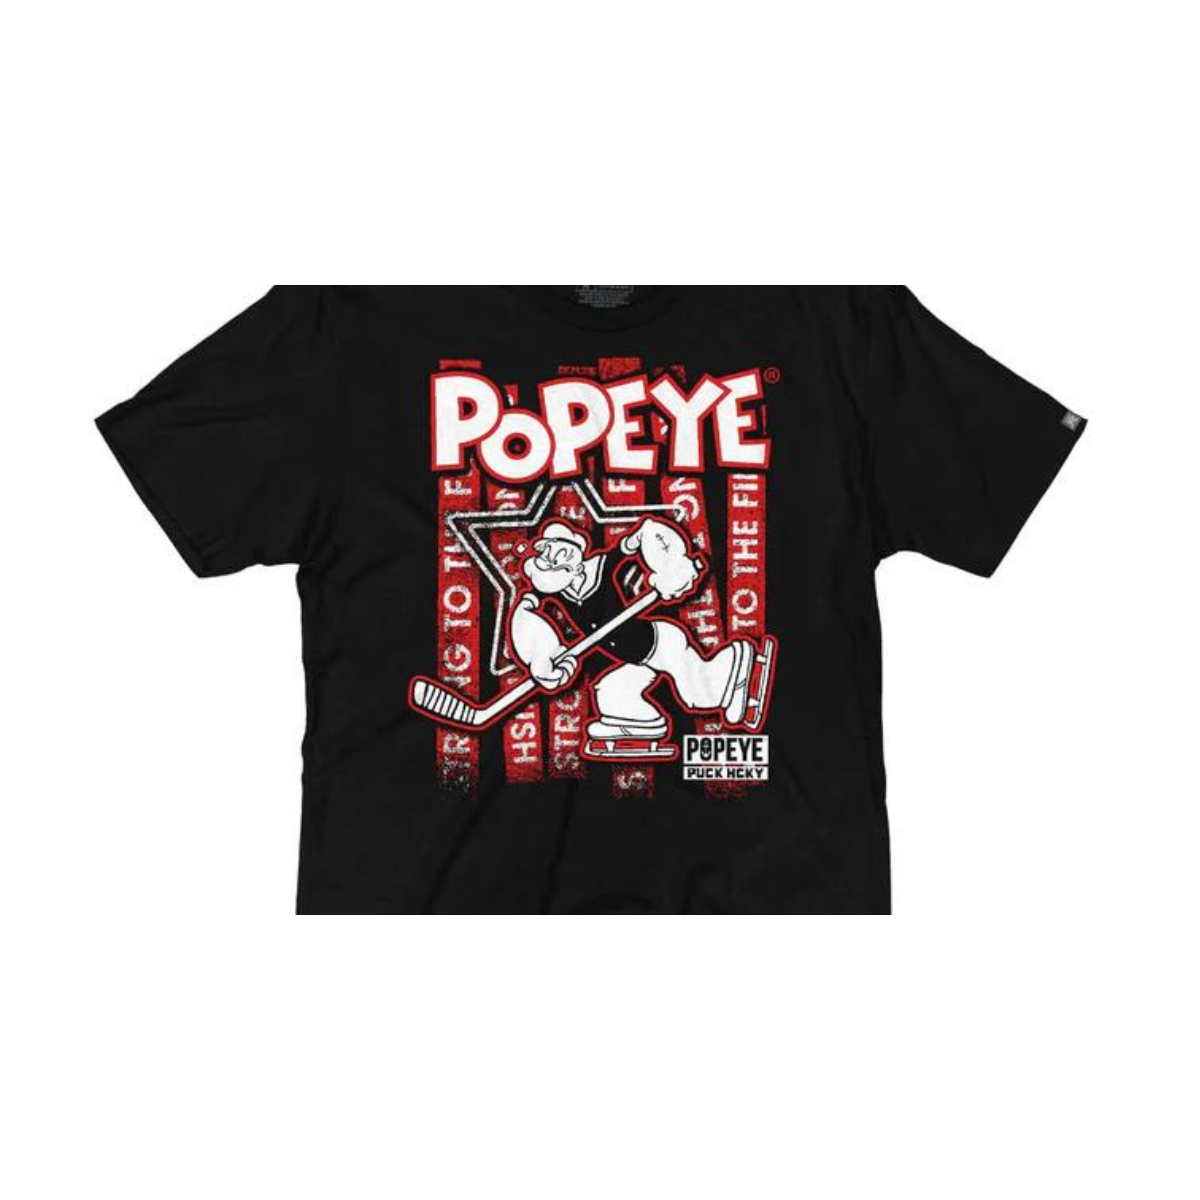 T-Shirt featuring Popeye-Print